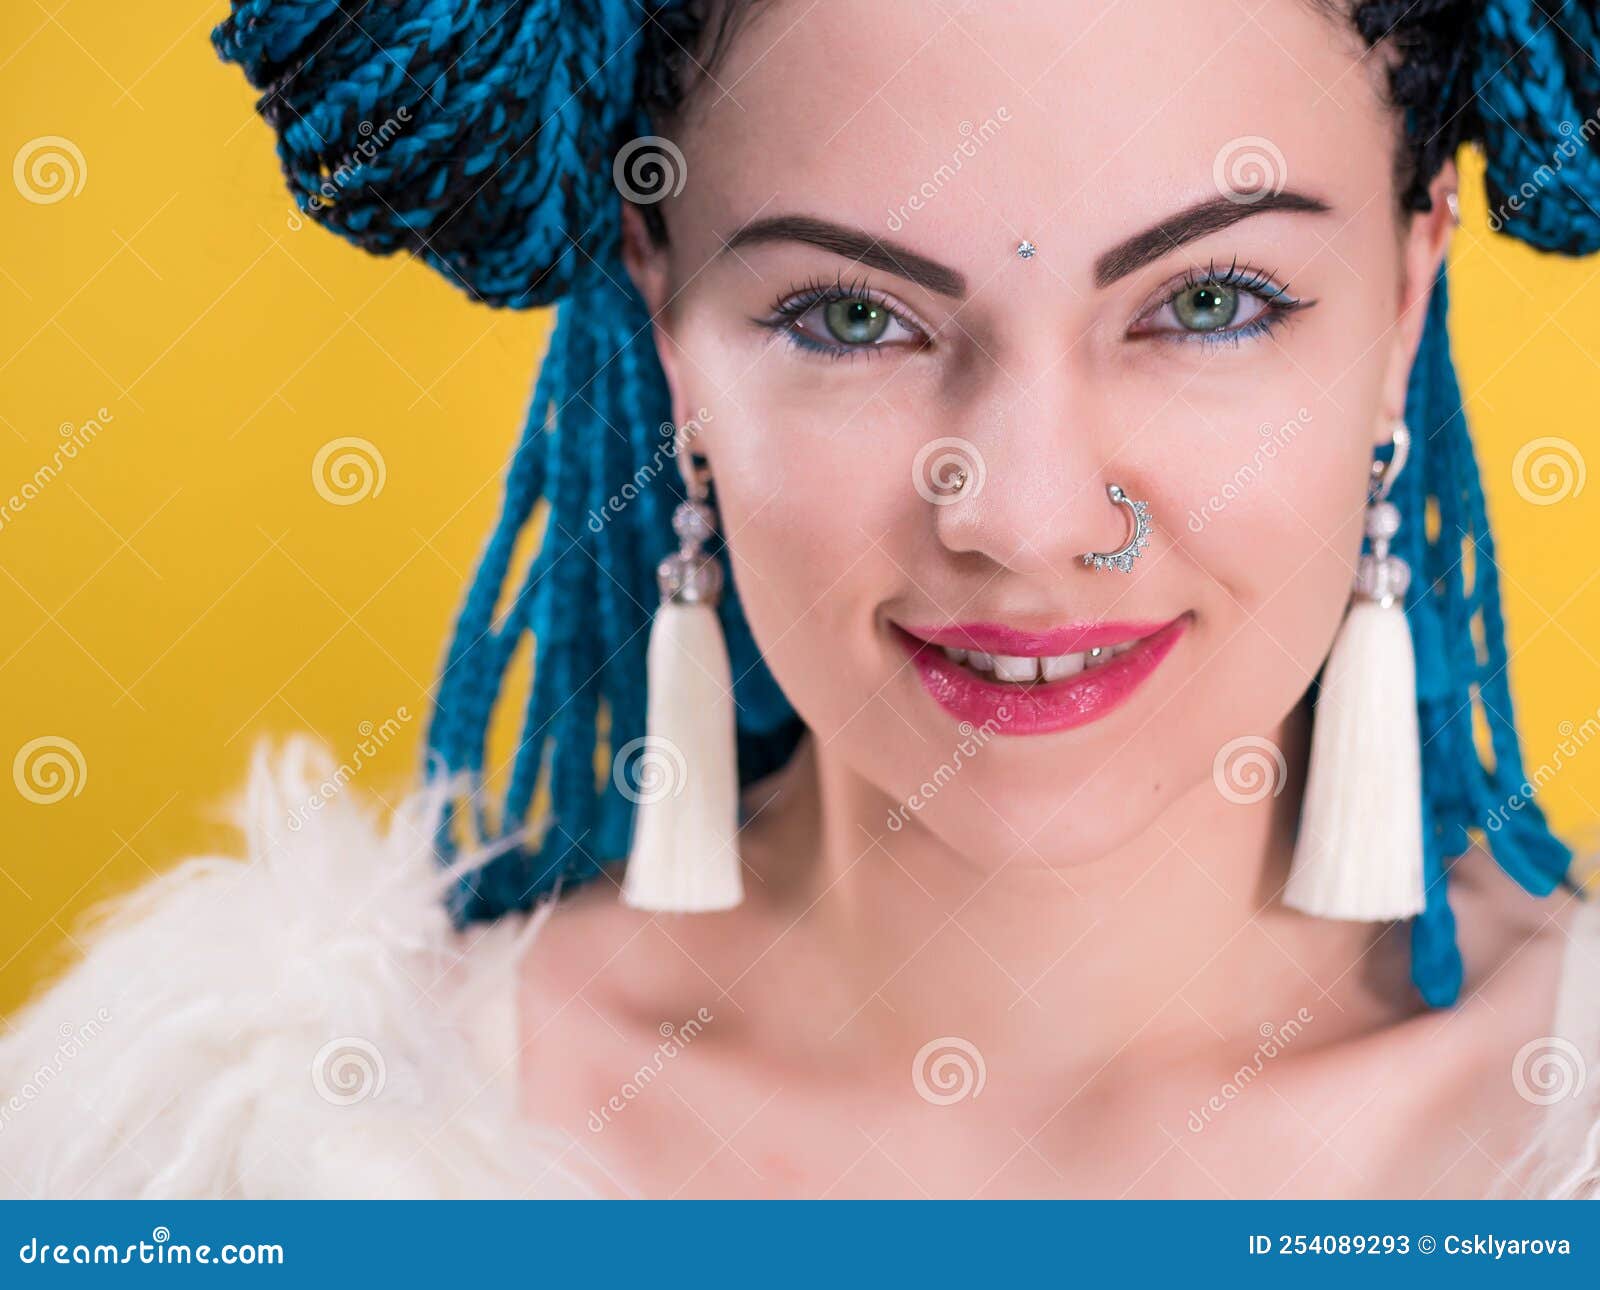 6Pcs African Nose Cuff Non Piercing Ring For Women Fake Piercings 02 | eBay